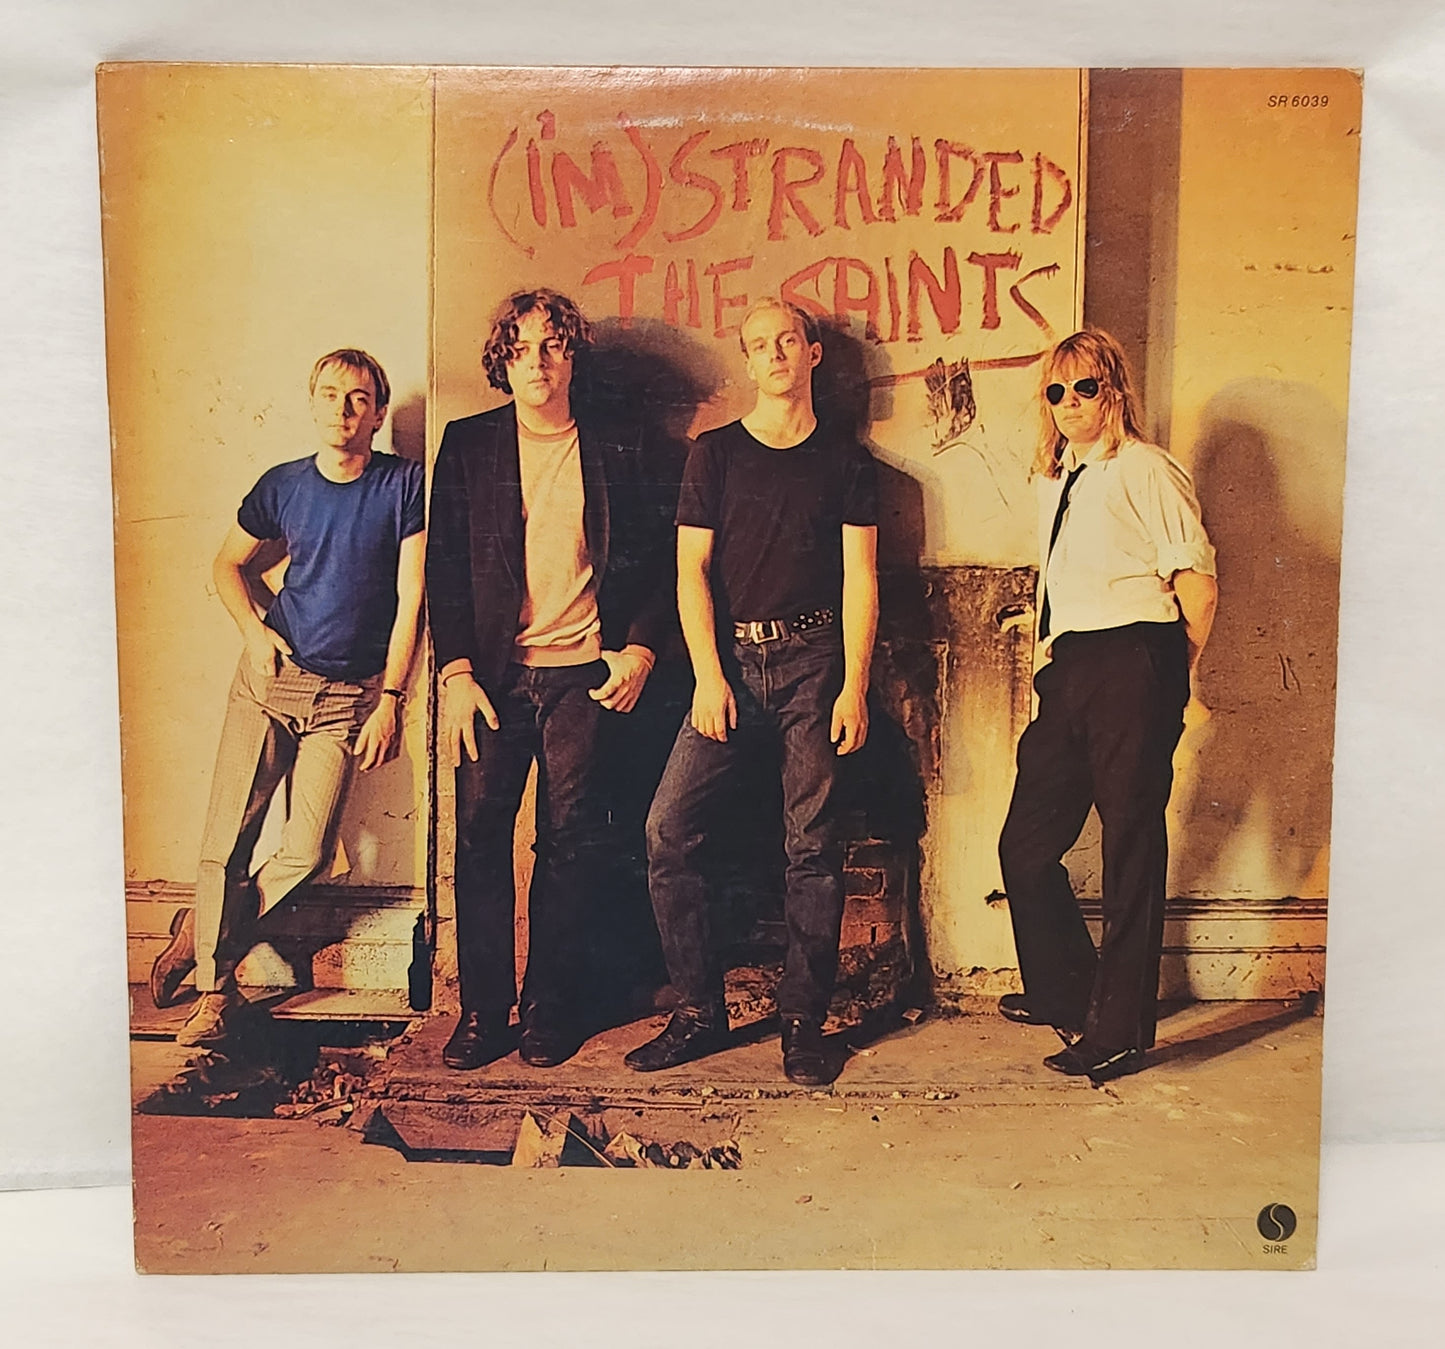 The Saints "I'm Stranded" 1977 Punk Rock Record Album